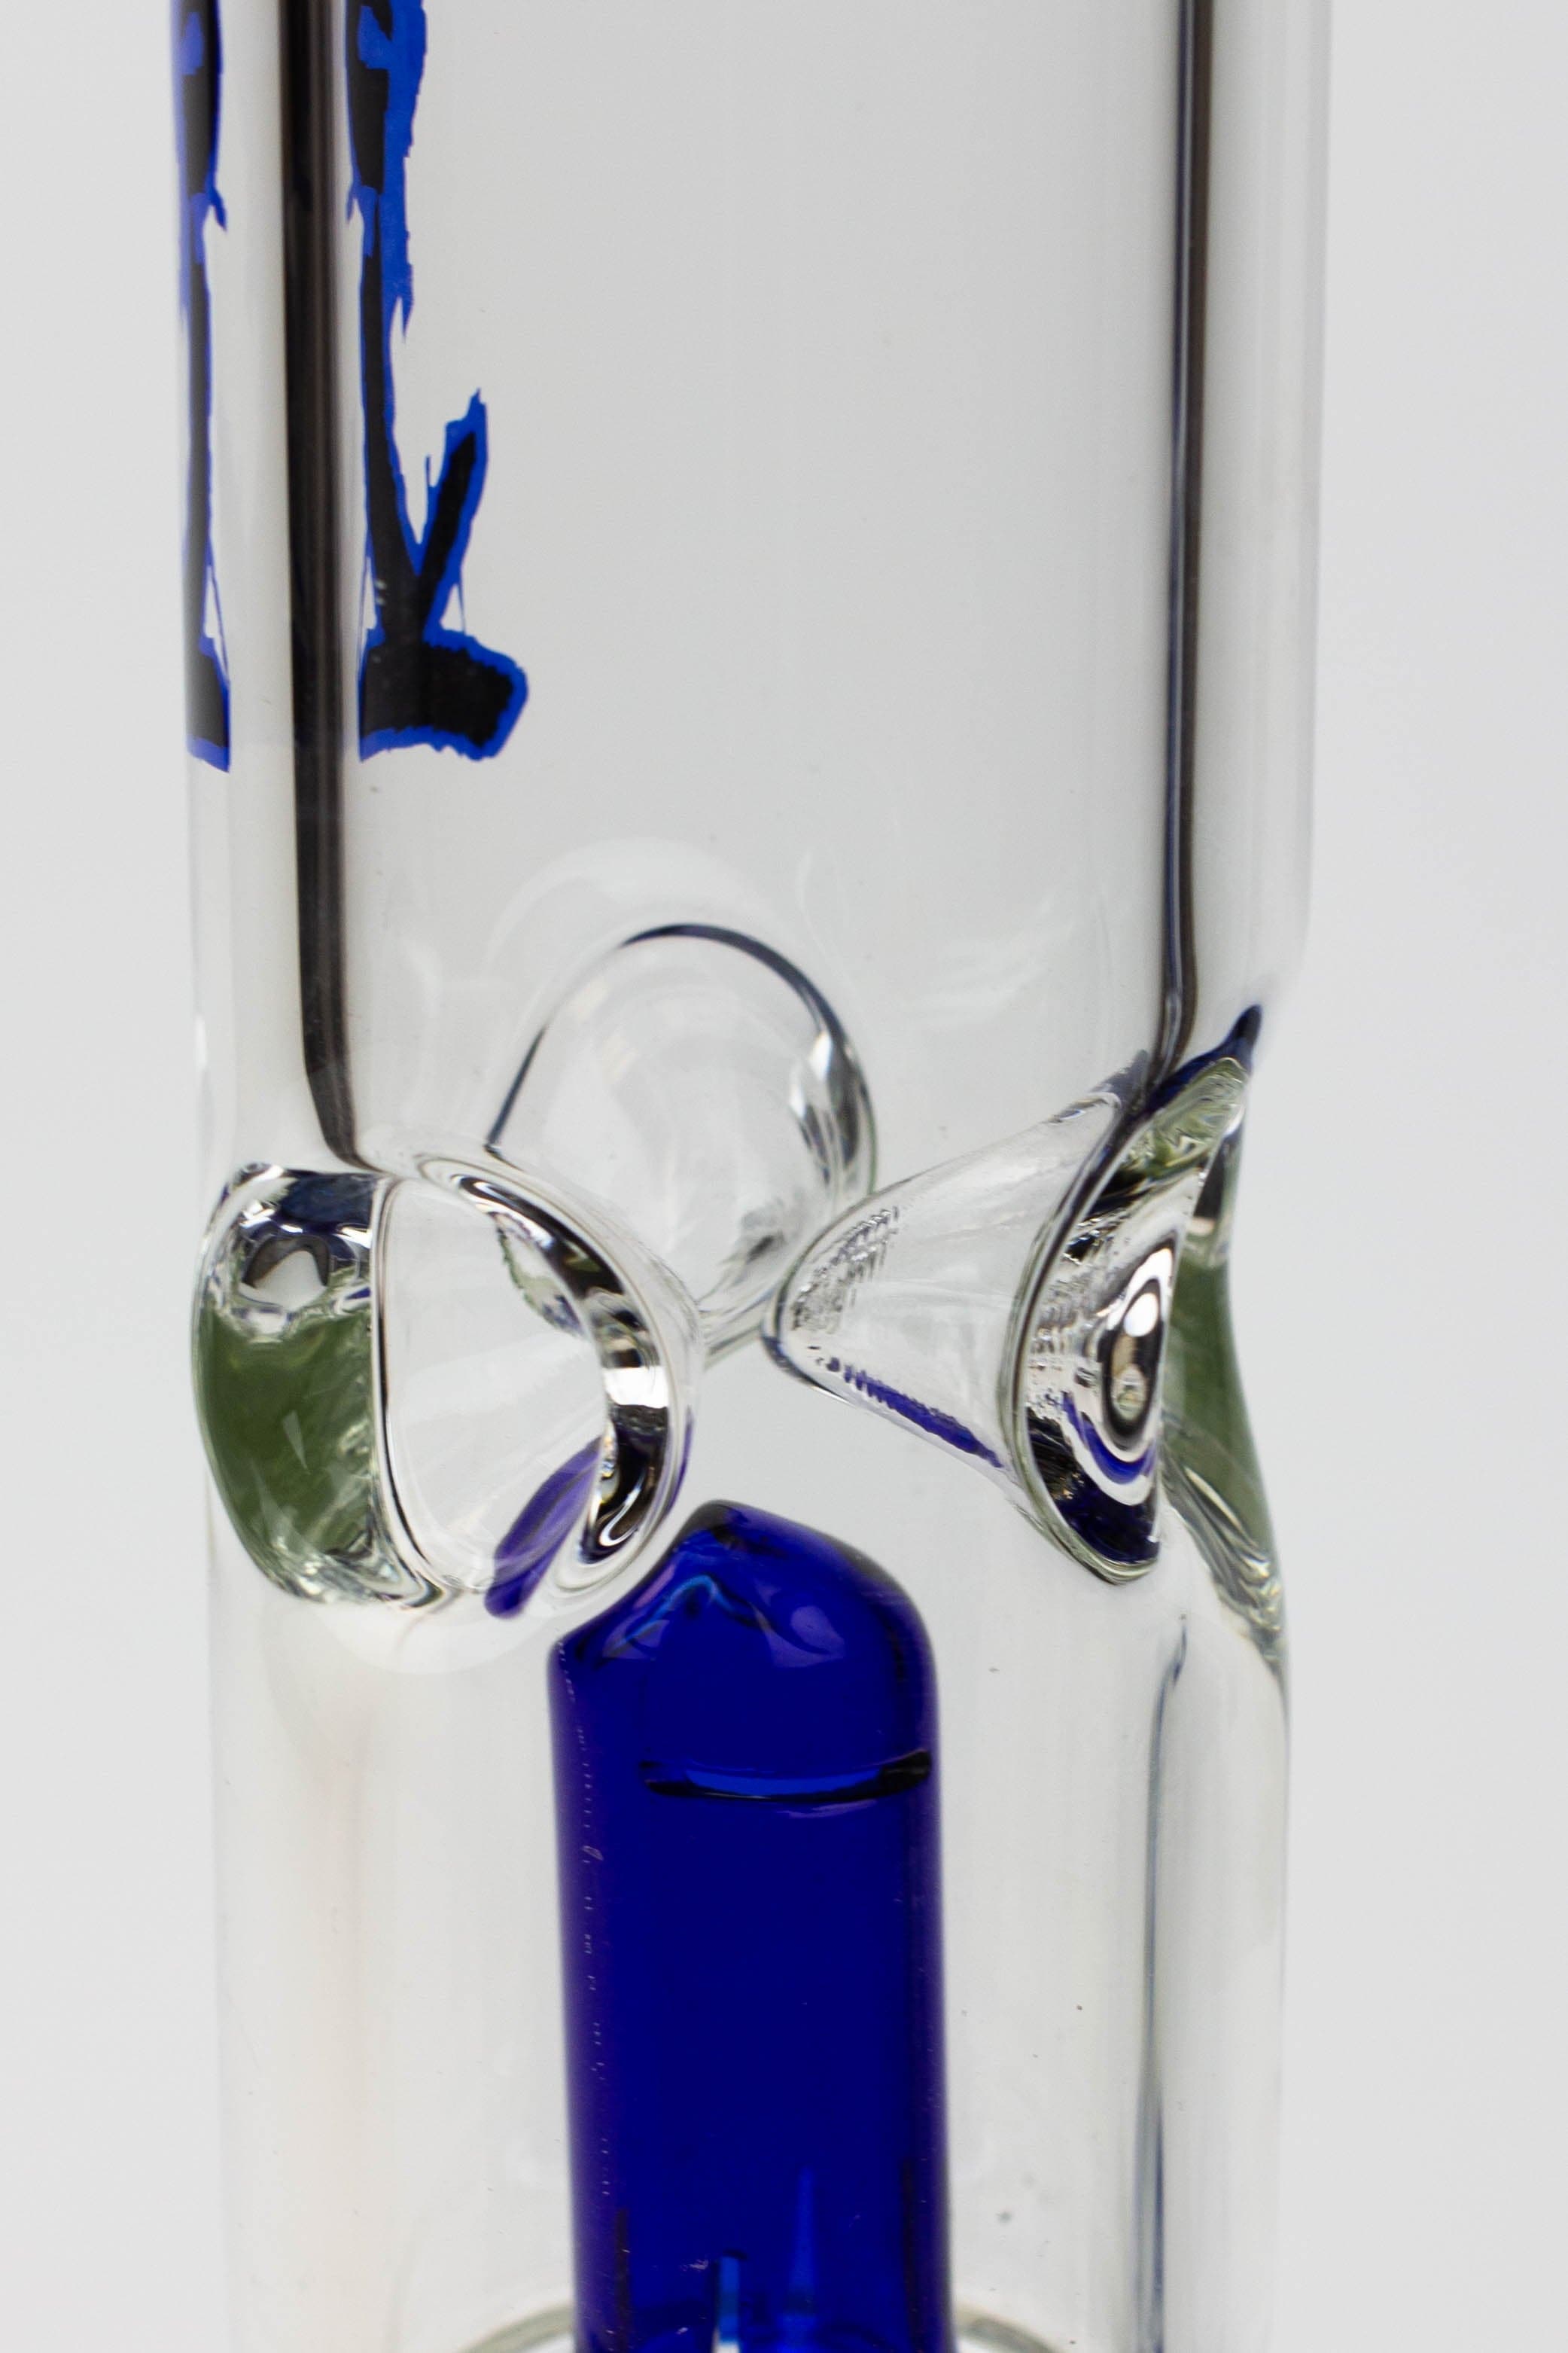 Kush inline diffuser splash guard glass water pipes_13